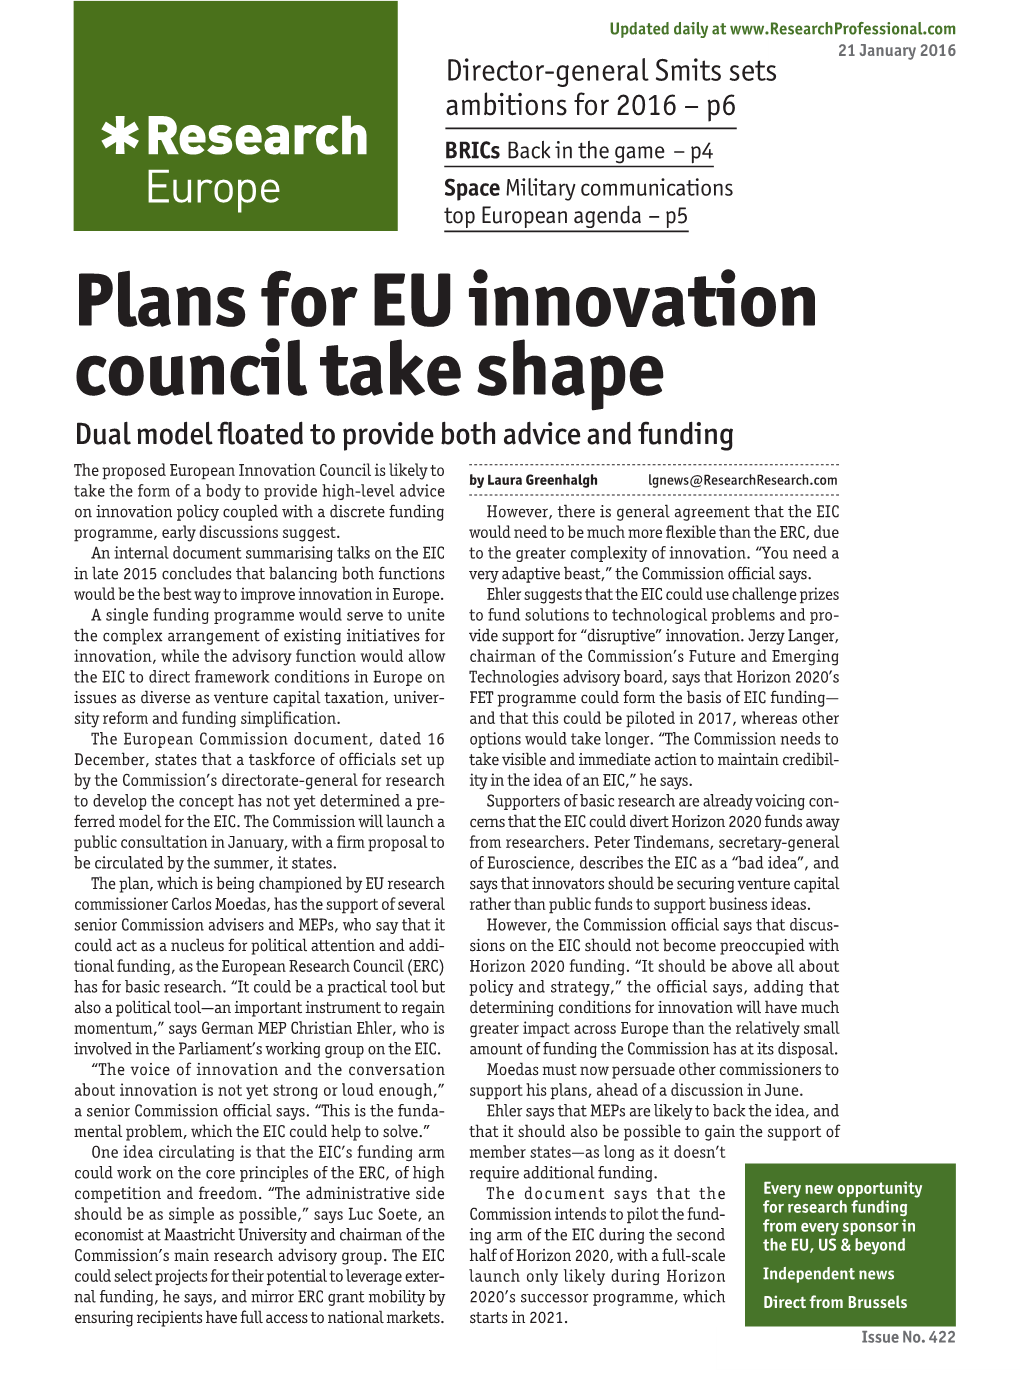 Plans for EU Innovation Council Take Shape